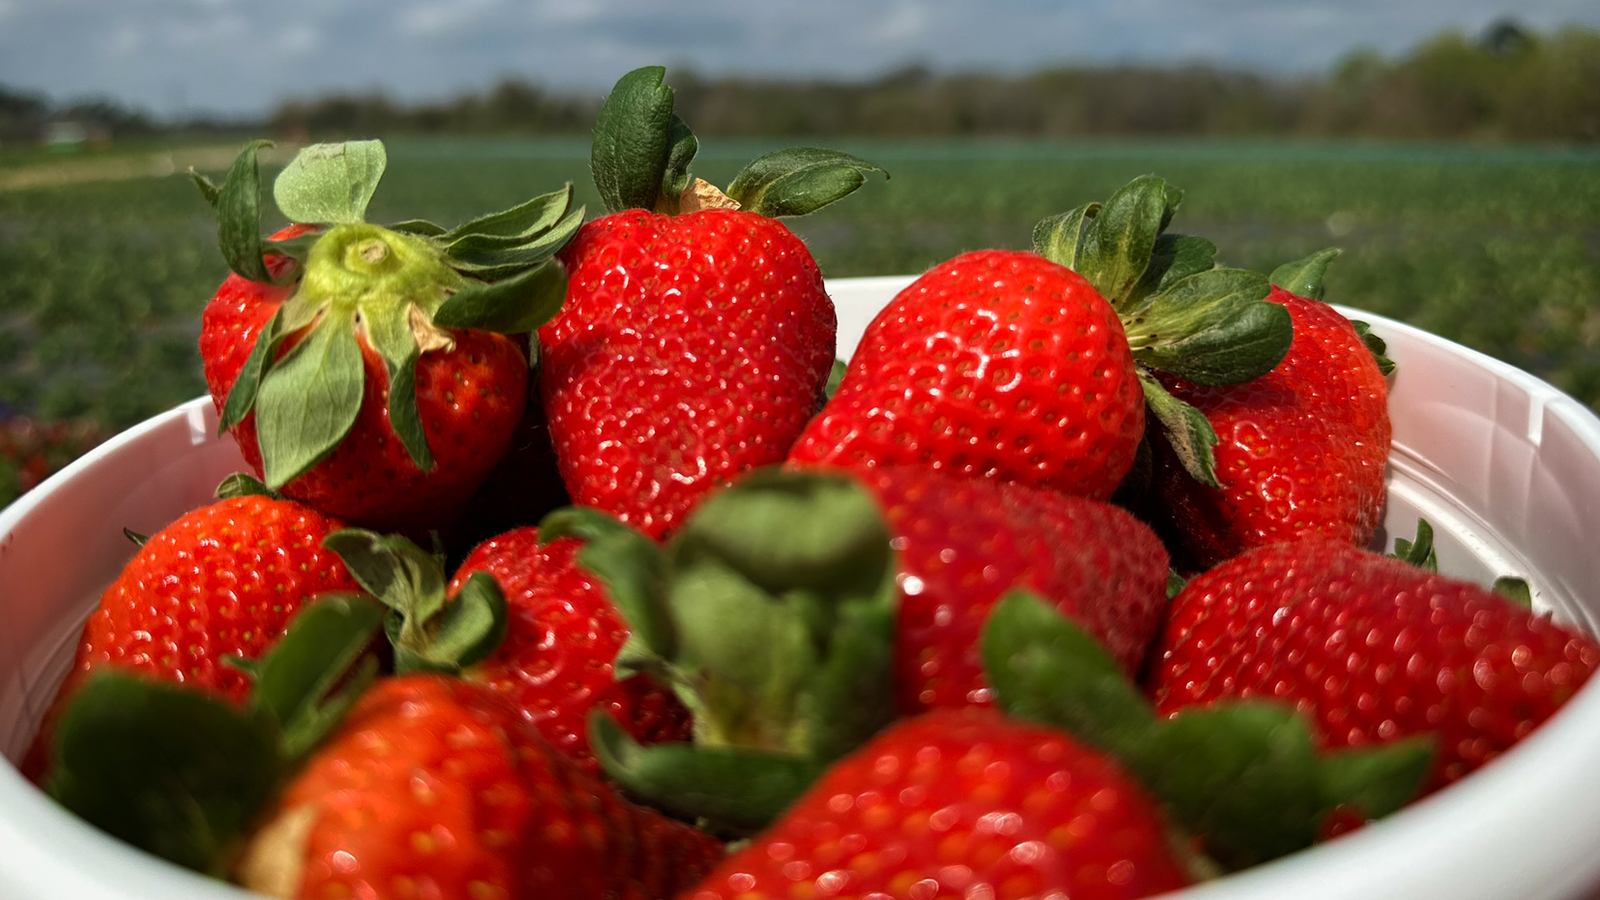 Eyewitness News on Twitter: "Rows of strawberries ready for picking at  Froberg's Farm https://t.co/Cx3u8TJYoG https://t.co/dkV2L39pBx" / Twitter